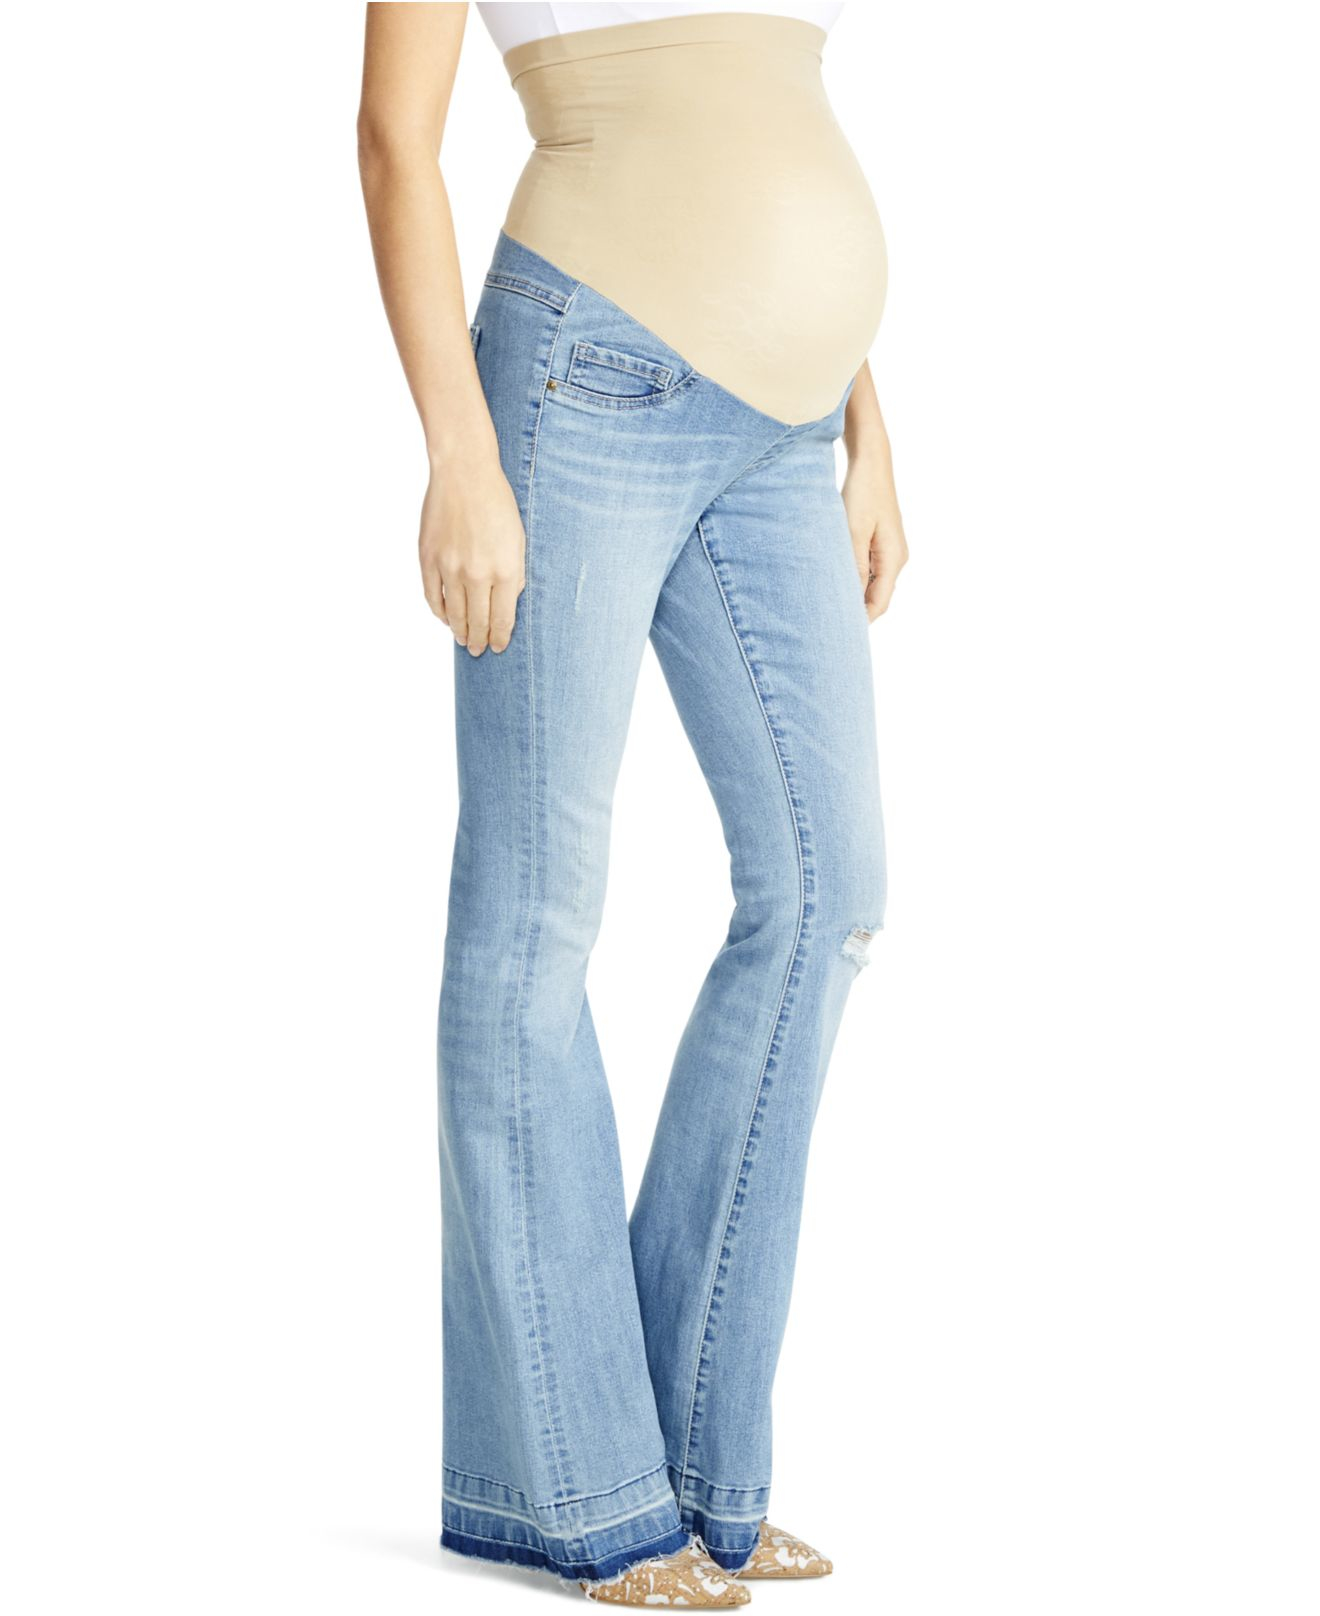 Simpson Maternity Jeans Size Chart